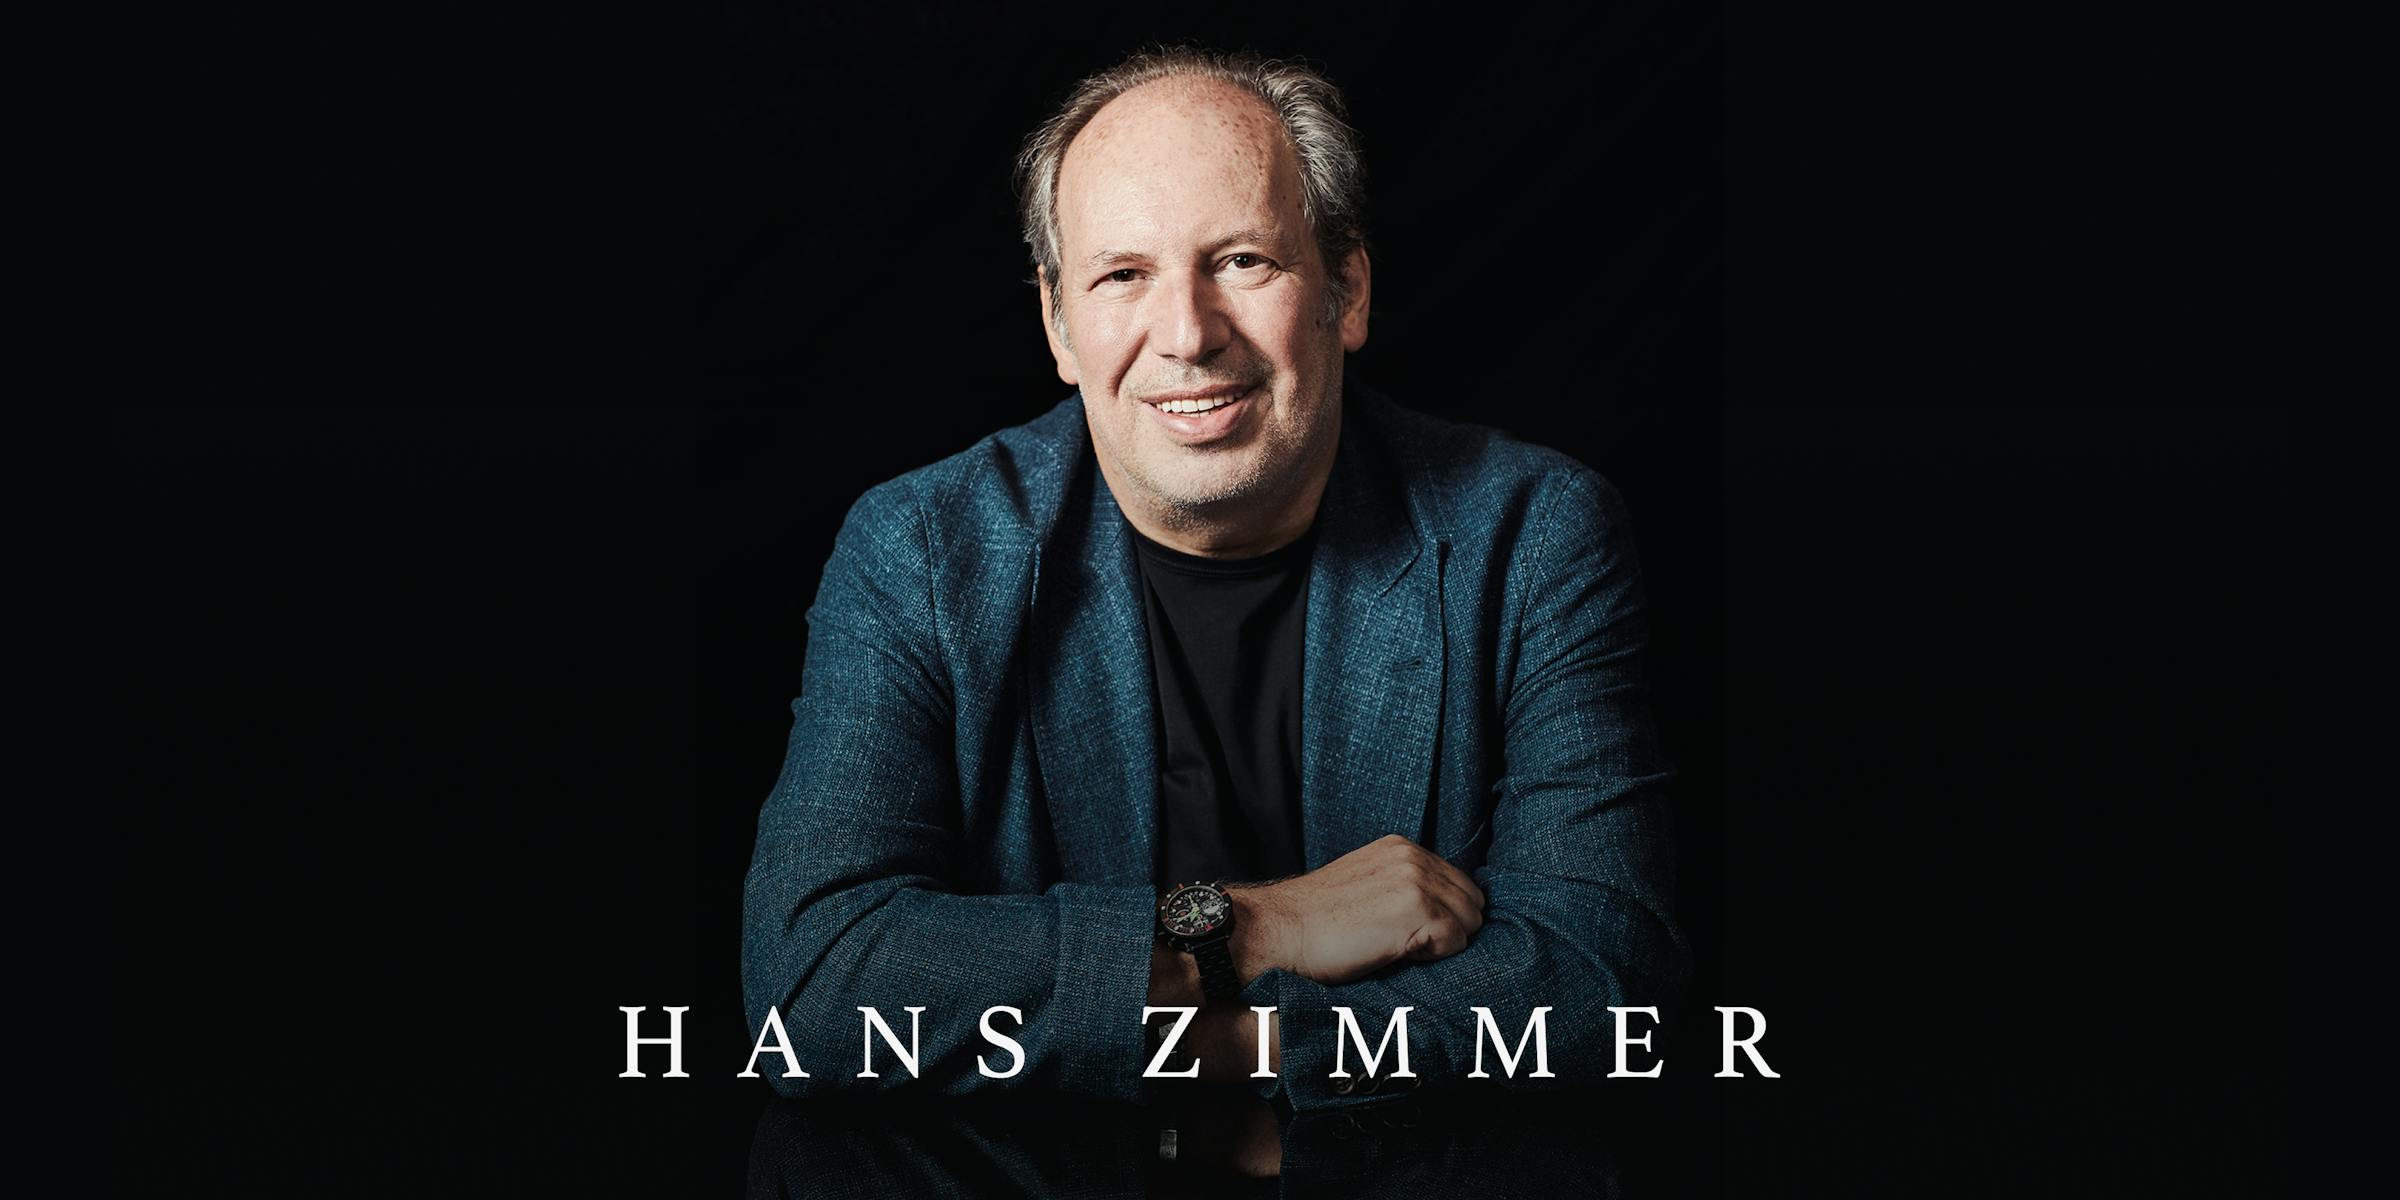 Hans Zimmer - Hans Zimmer added a new photo.